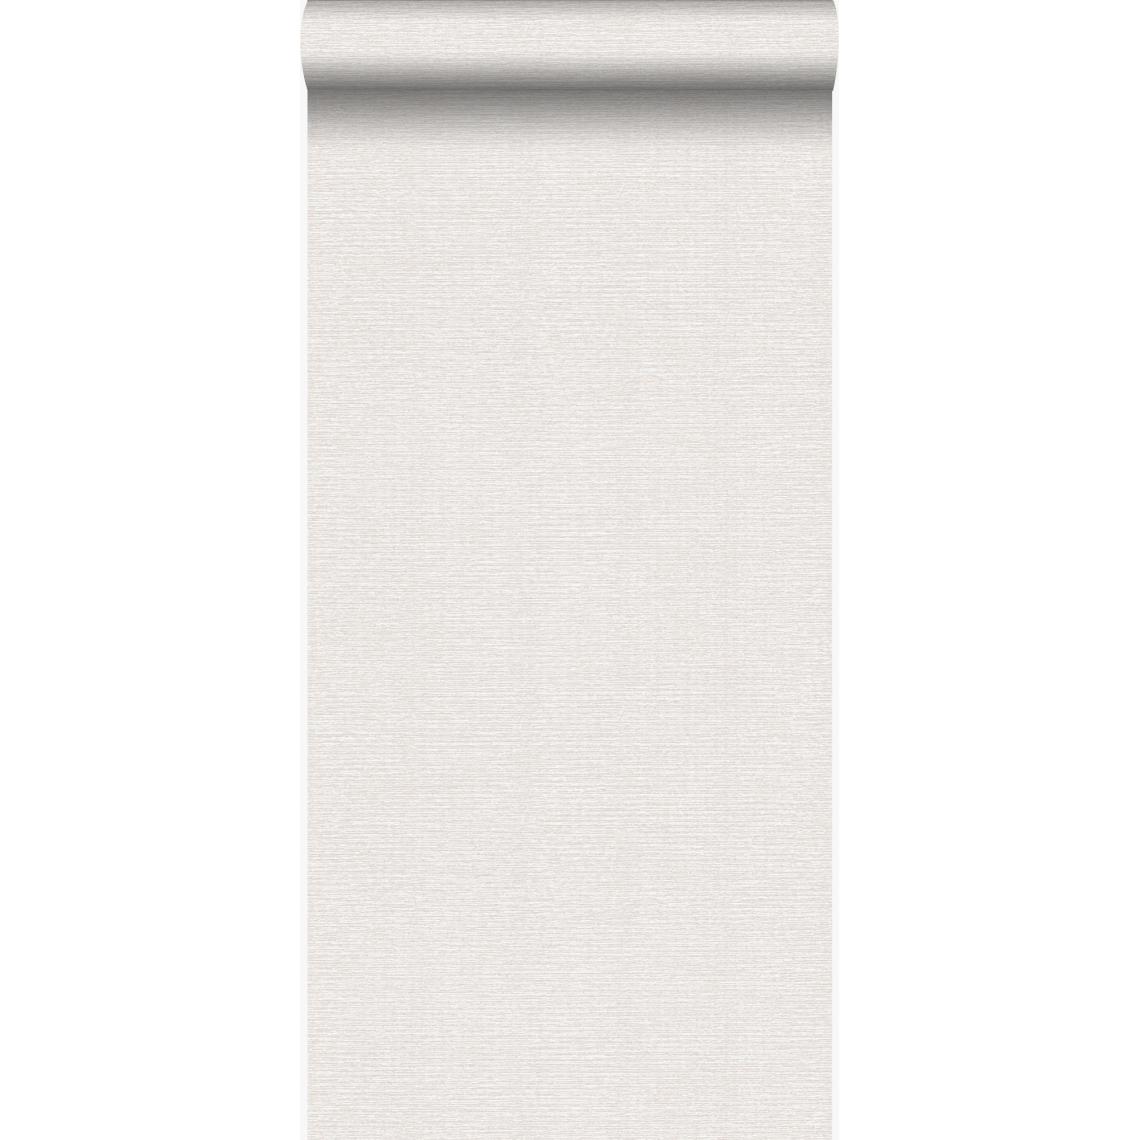 Origin - Origin papier peint lin beige clair - 347374 - 53 cm x 10,05 m - Papier peint